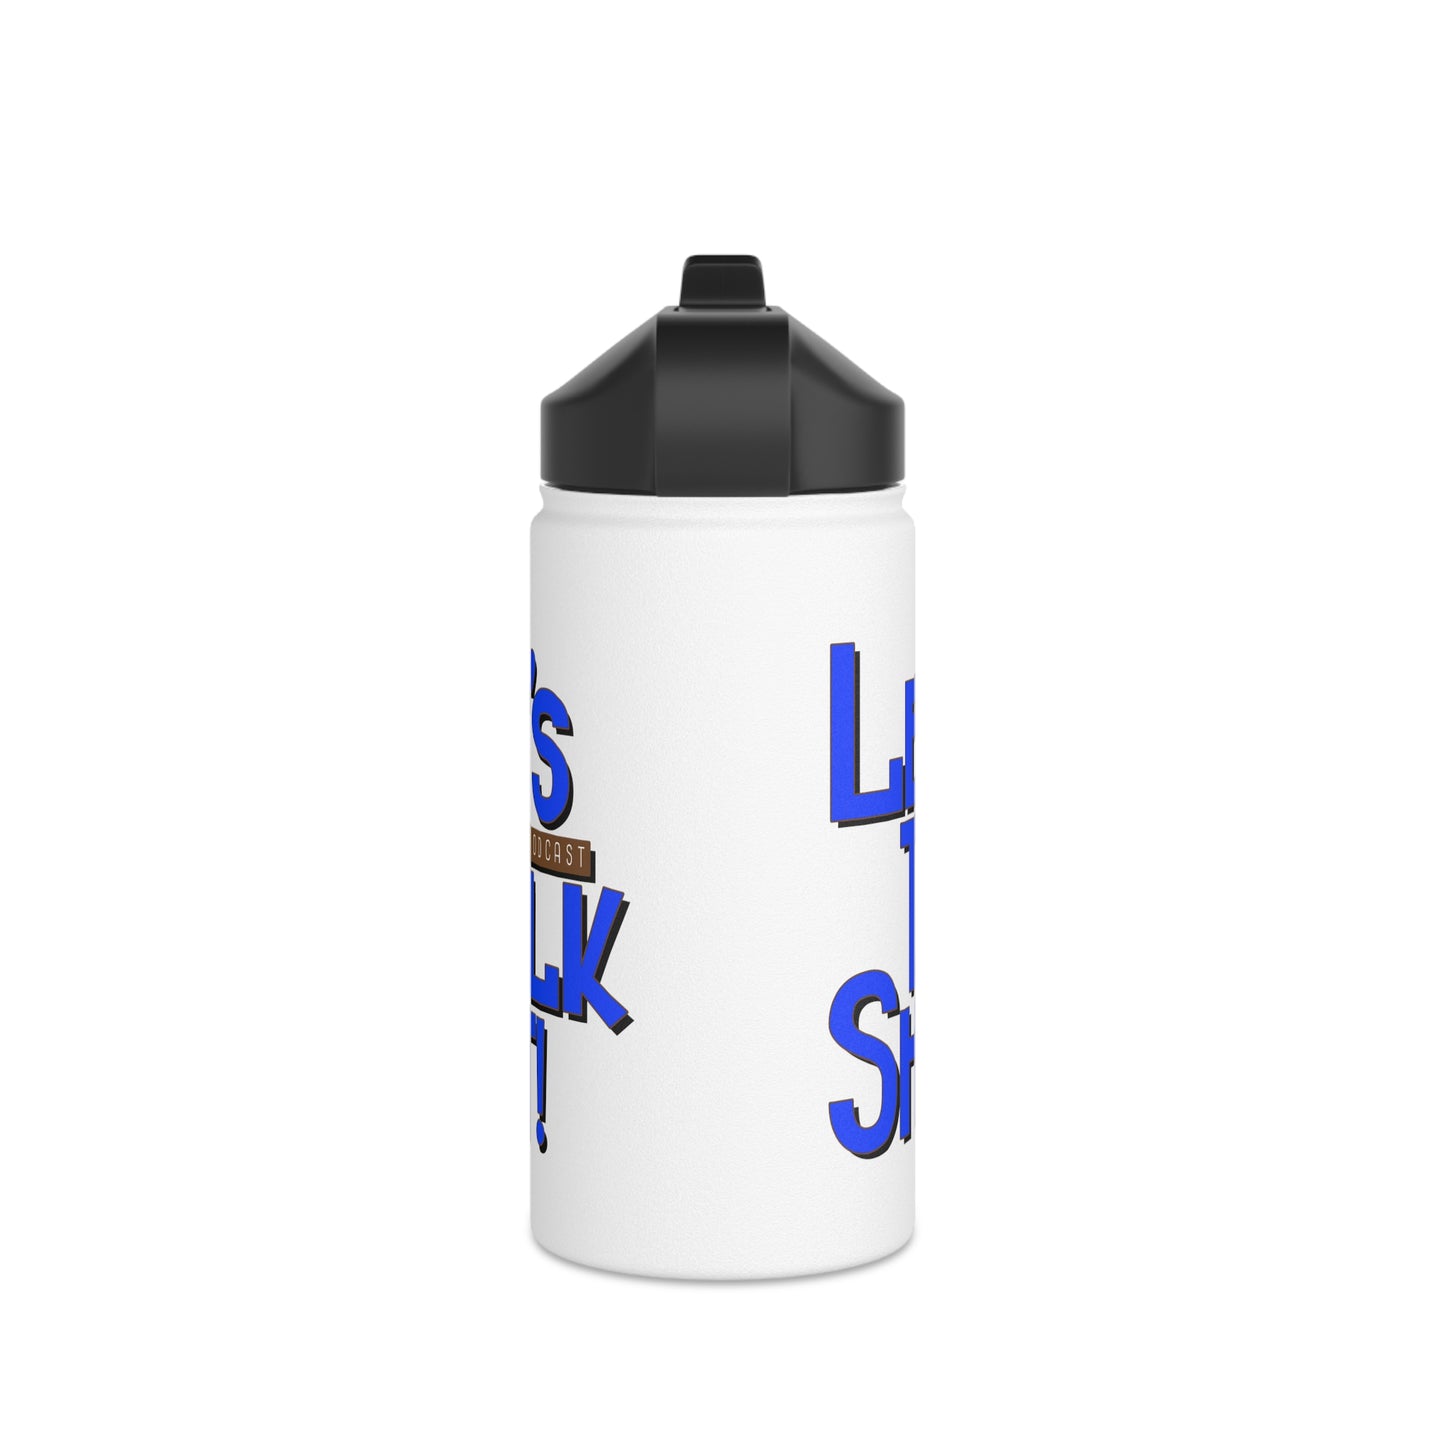 Let's Talk Sh!t Podcast Stainless Steel Water Bottle, Standard Lid